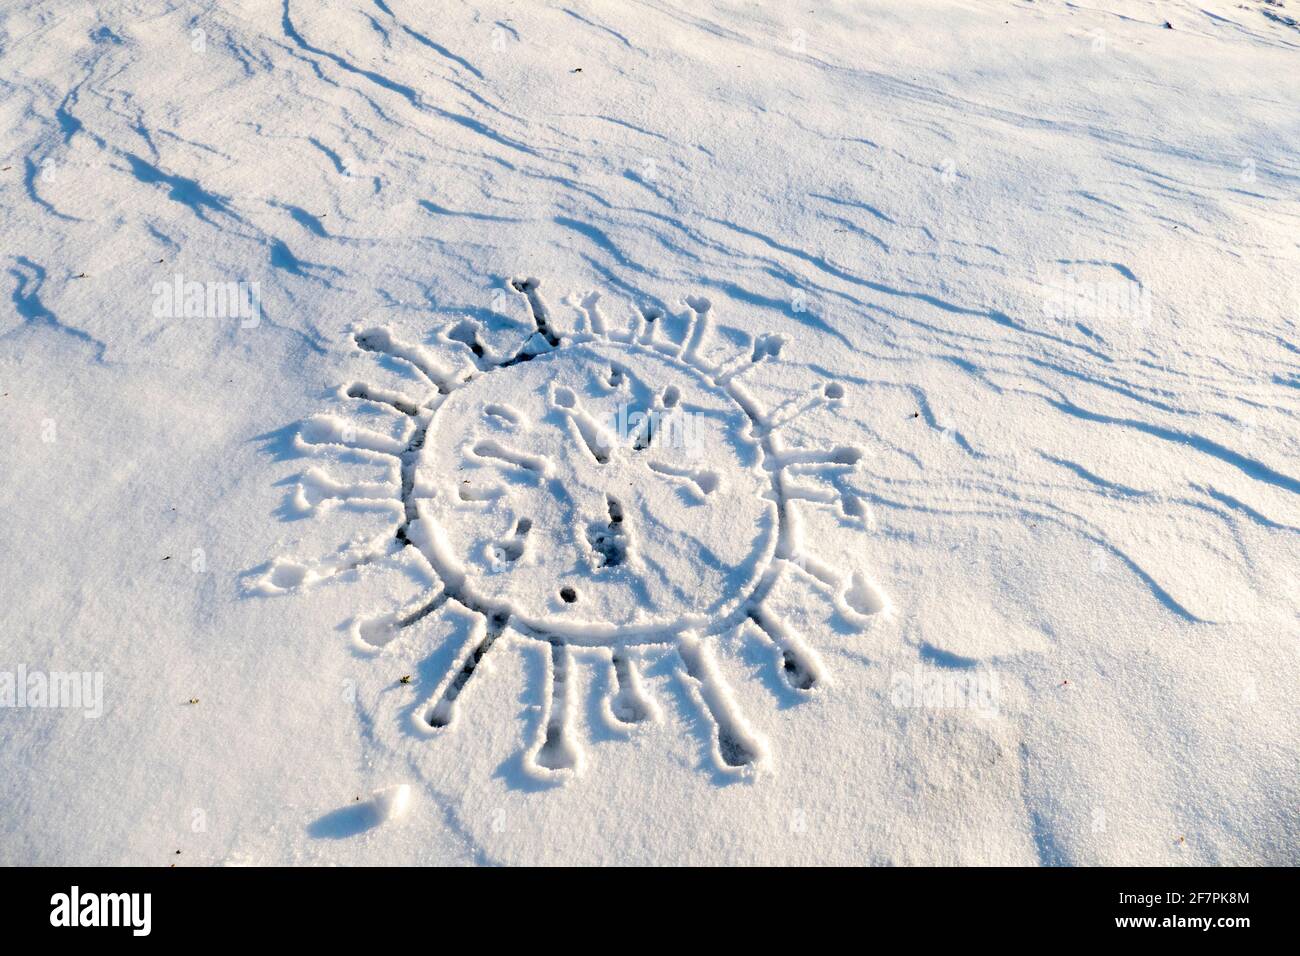 Corona, Covid-19 Virus in den Schnee gemalt Stock Photo